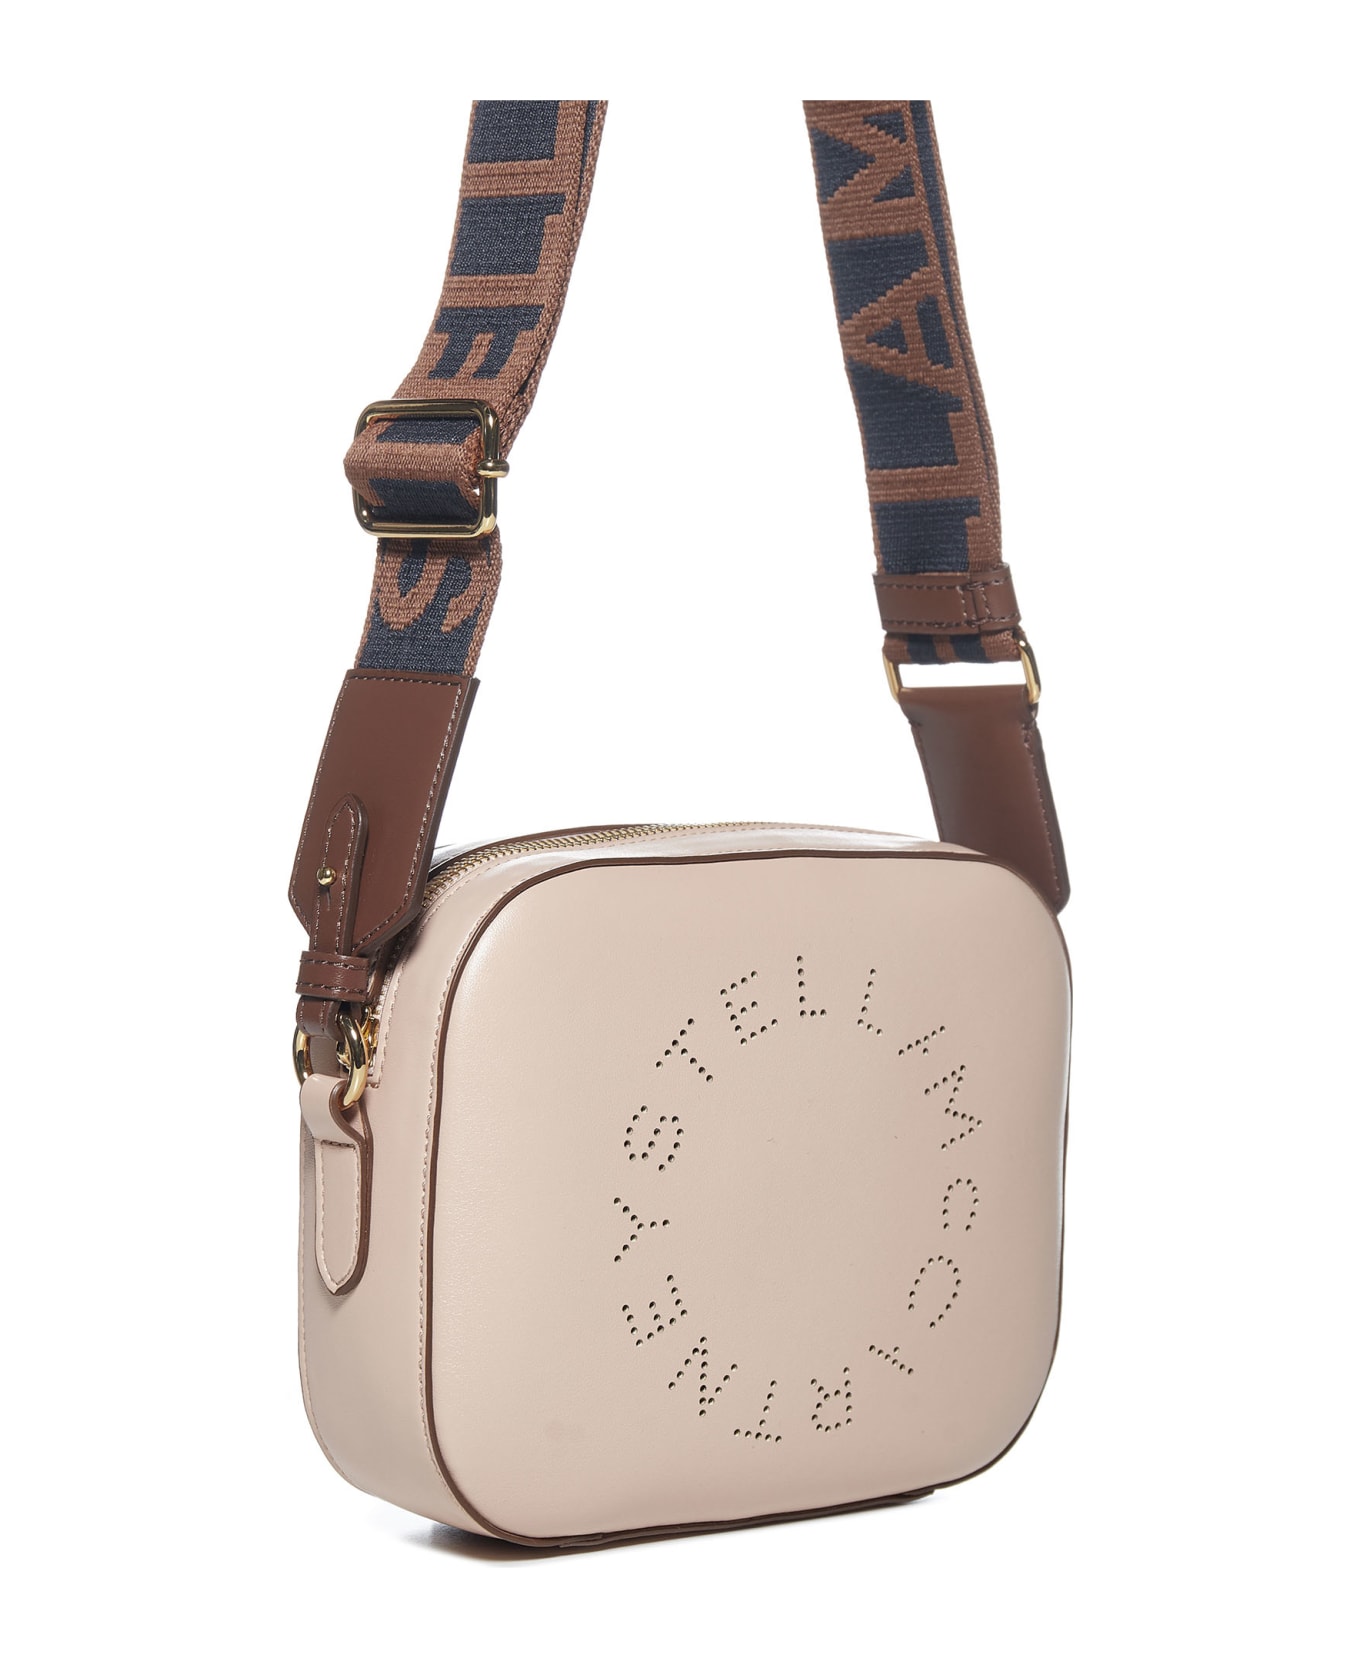 Stella McCartney Mini Camera Bag With Logo - Blush